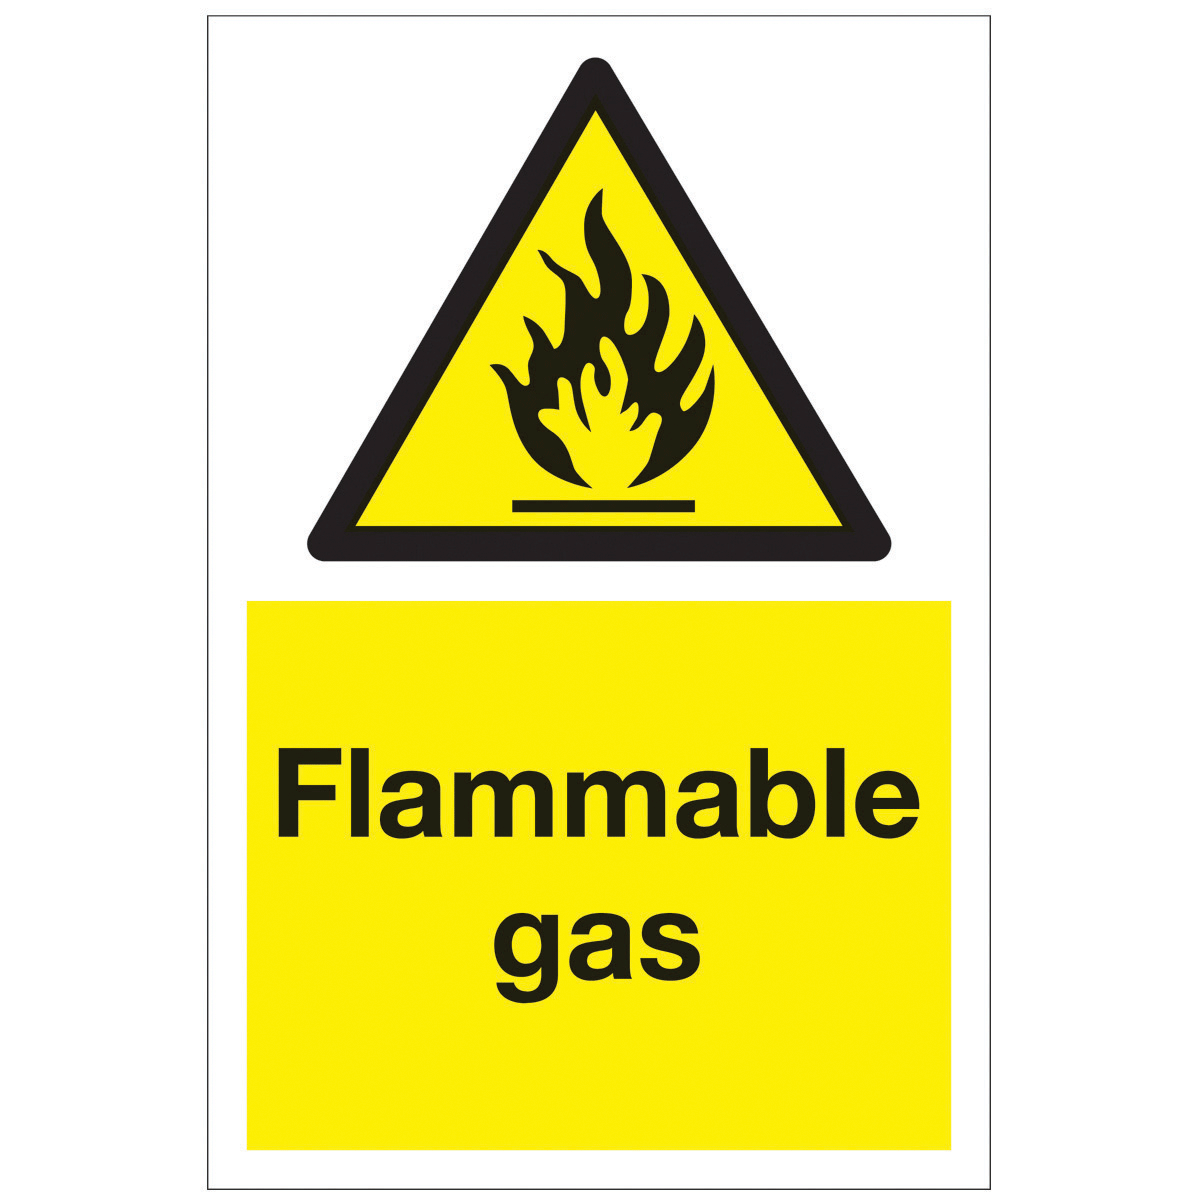 Flammable Gas Safety Sign - Hazard & Warning Sign from BiGDUG UK